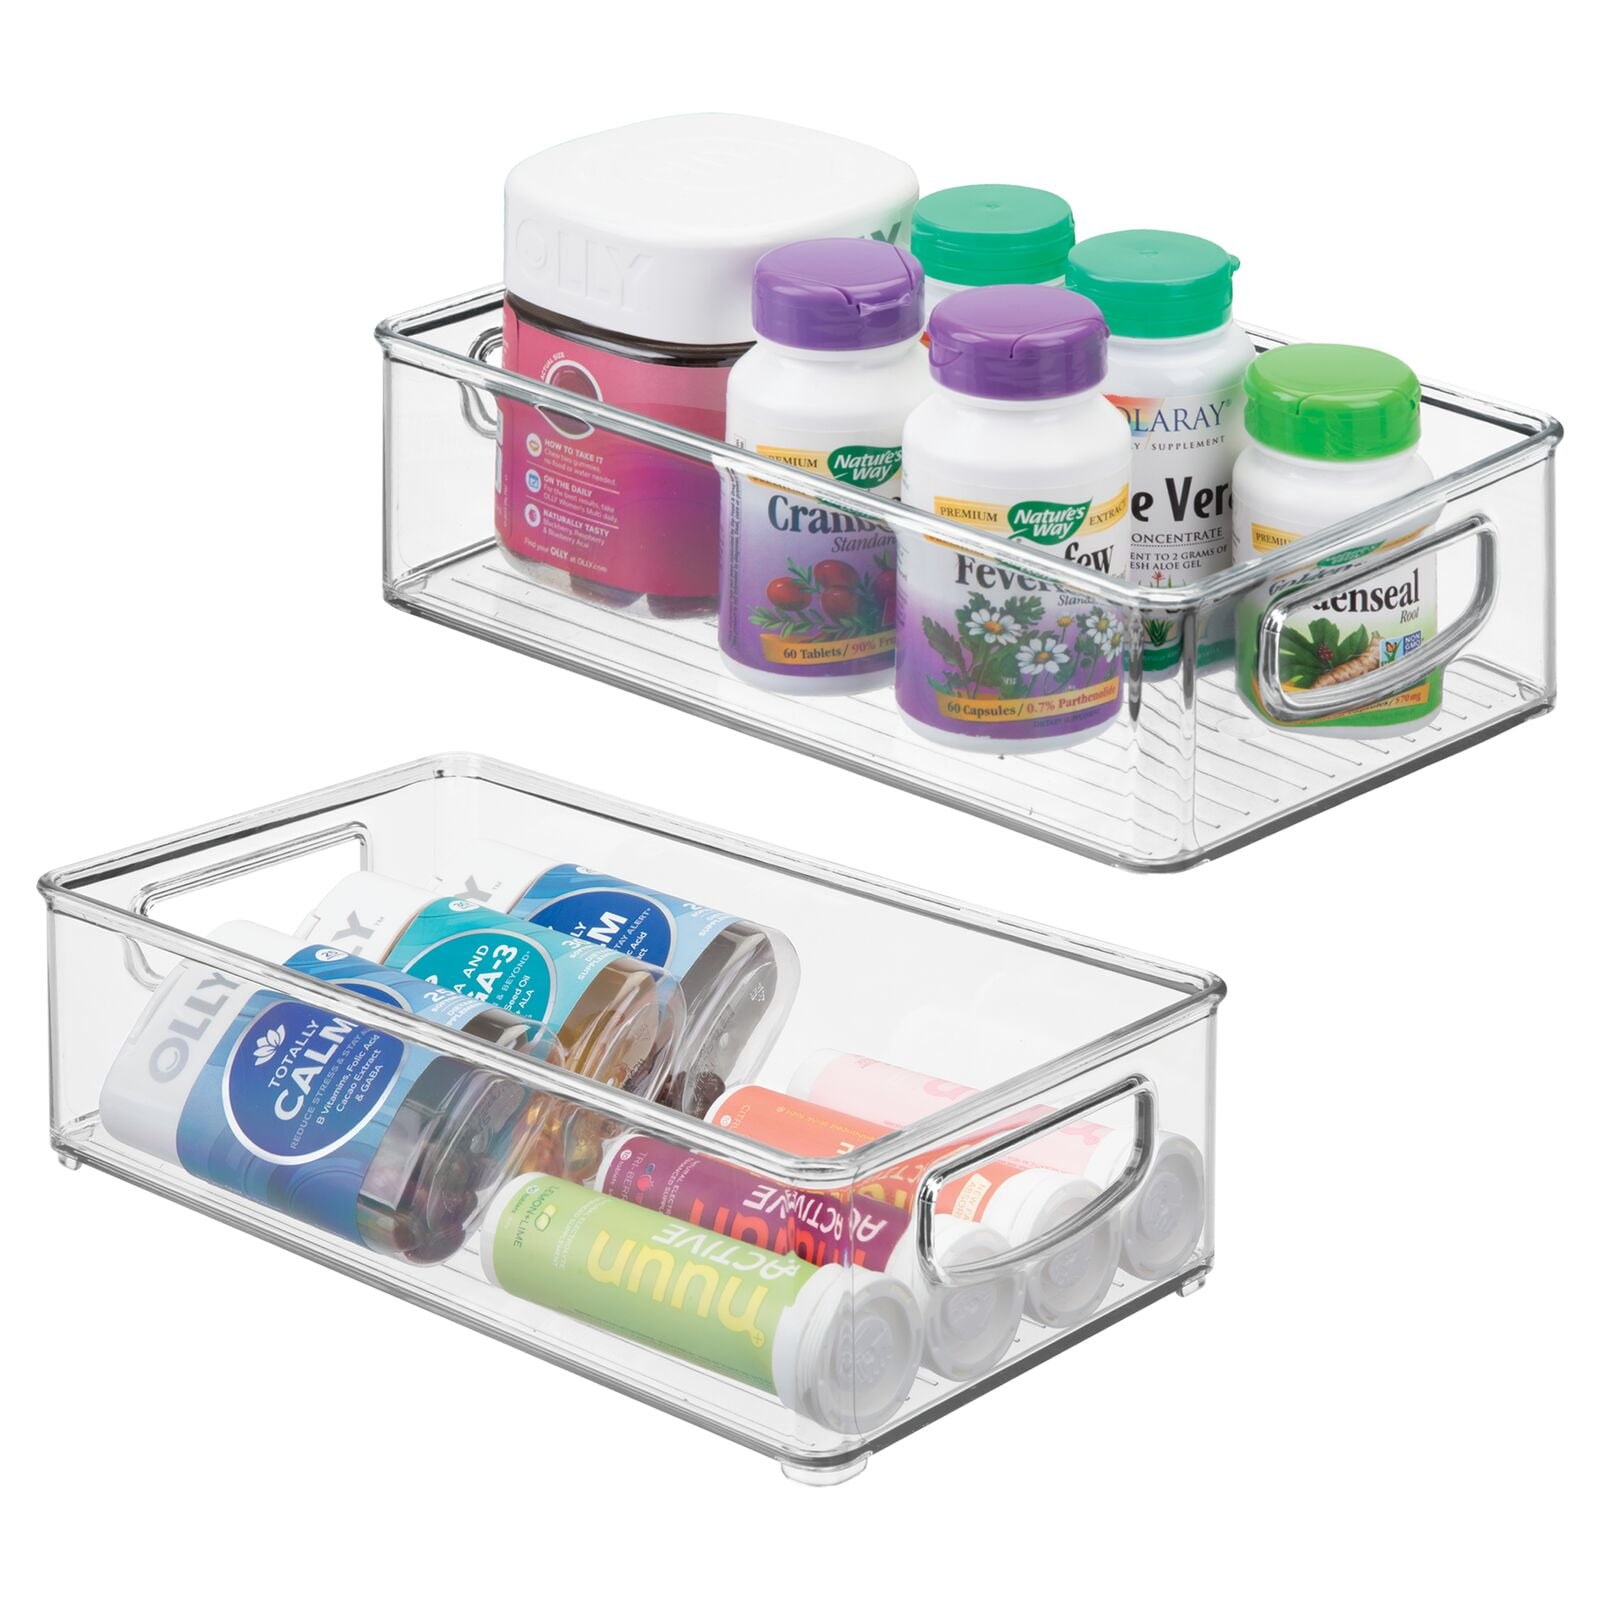 mDesign Large Plastic Bathroom Storage Bin Box with Handles/Lid, 2 Pack,  Clear